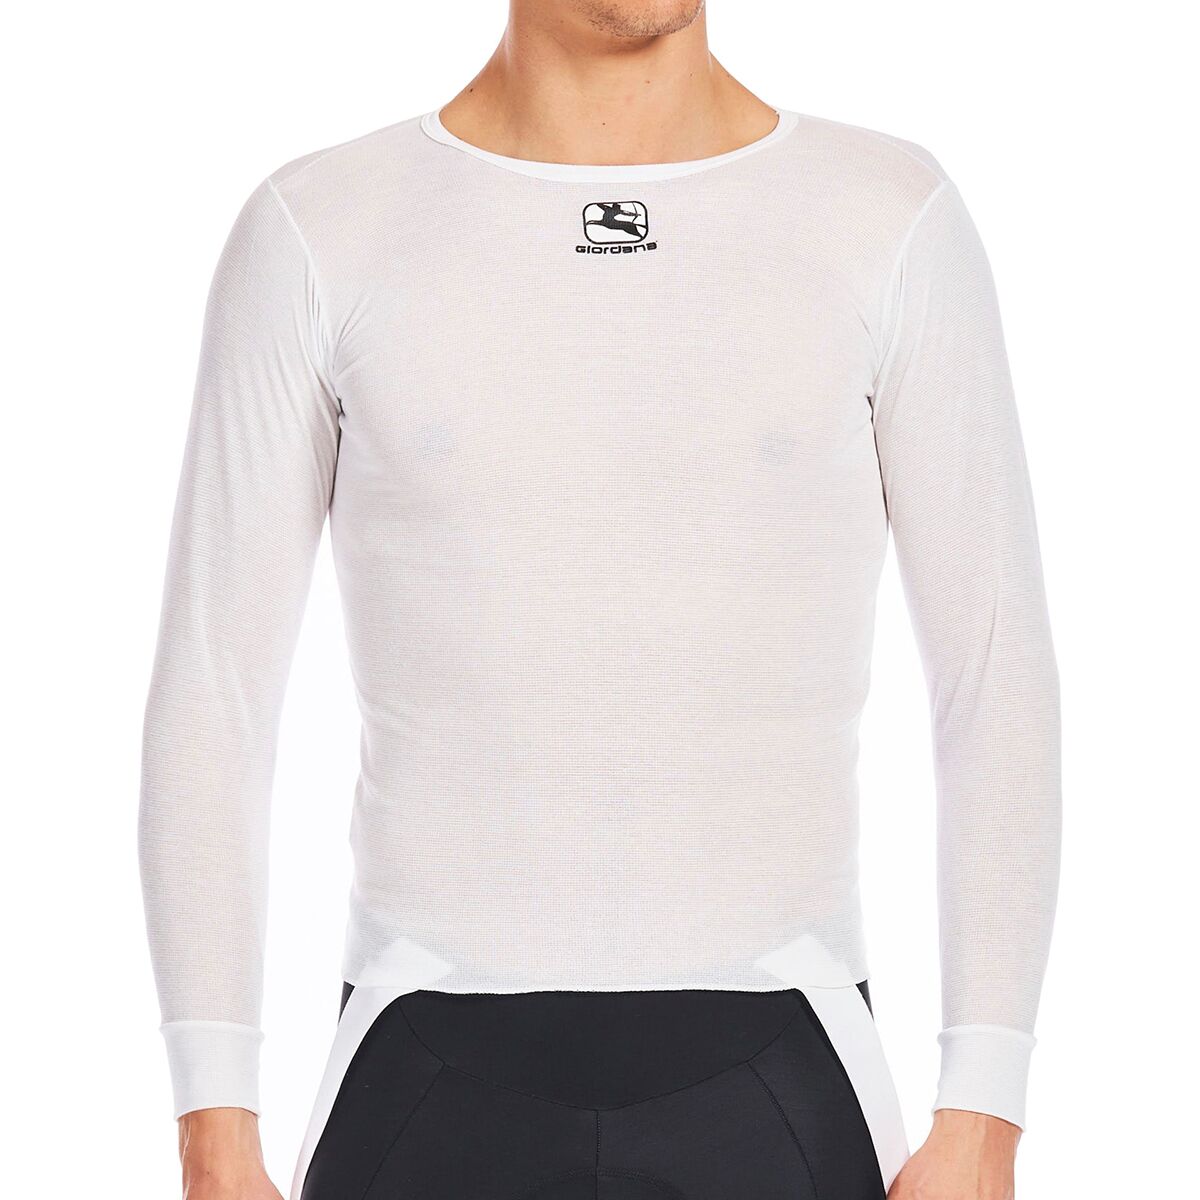 Giordana  Giordana Sport Long Sleeve Top White, Medium - Men's